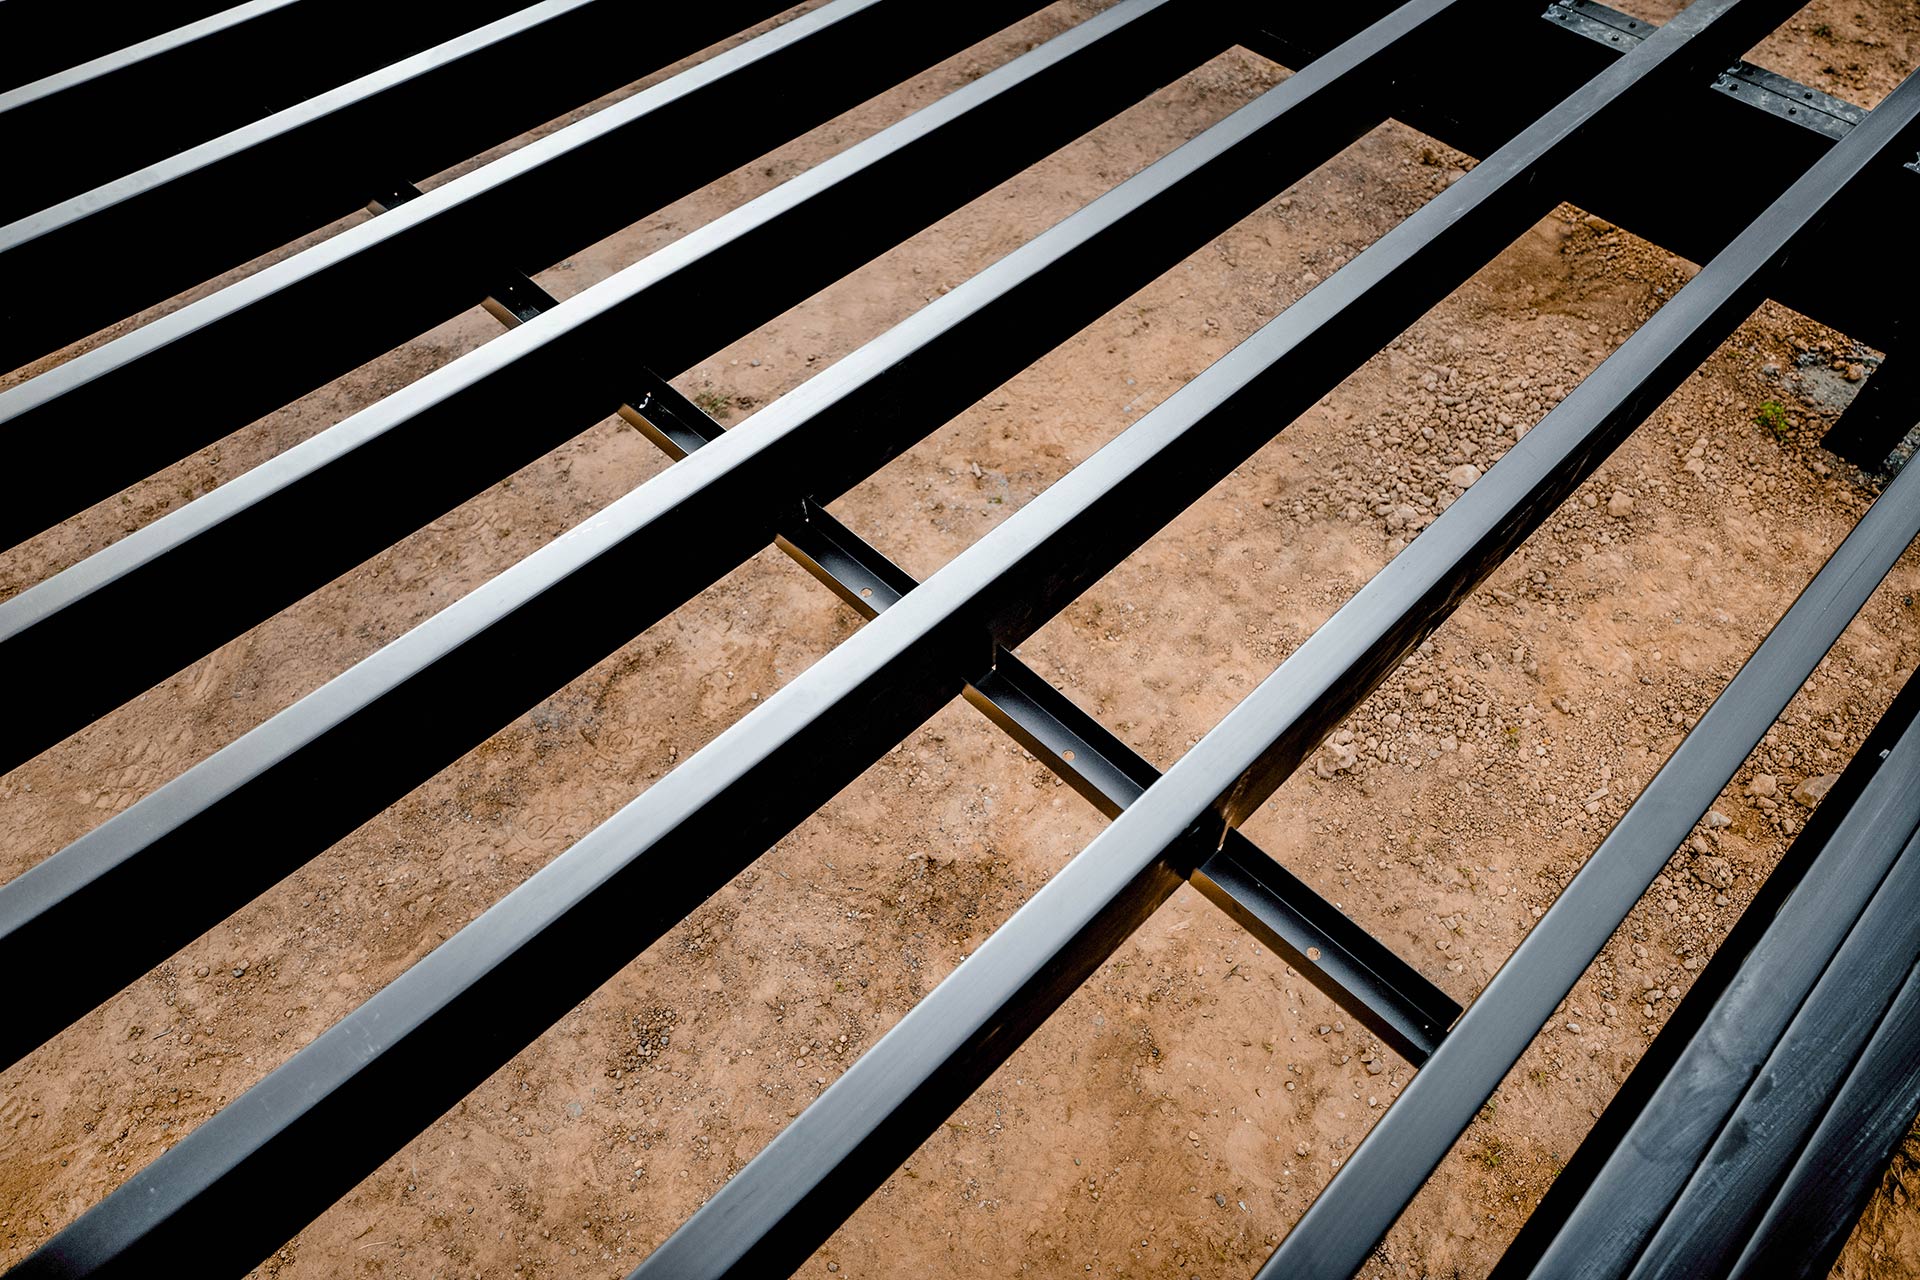 Overview of steel deck frame spanning long distances.